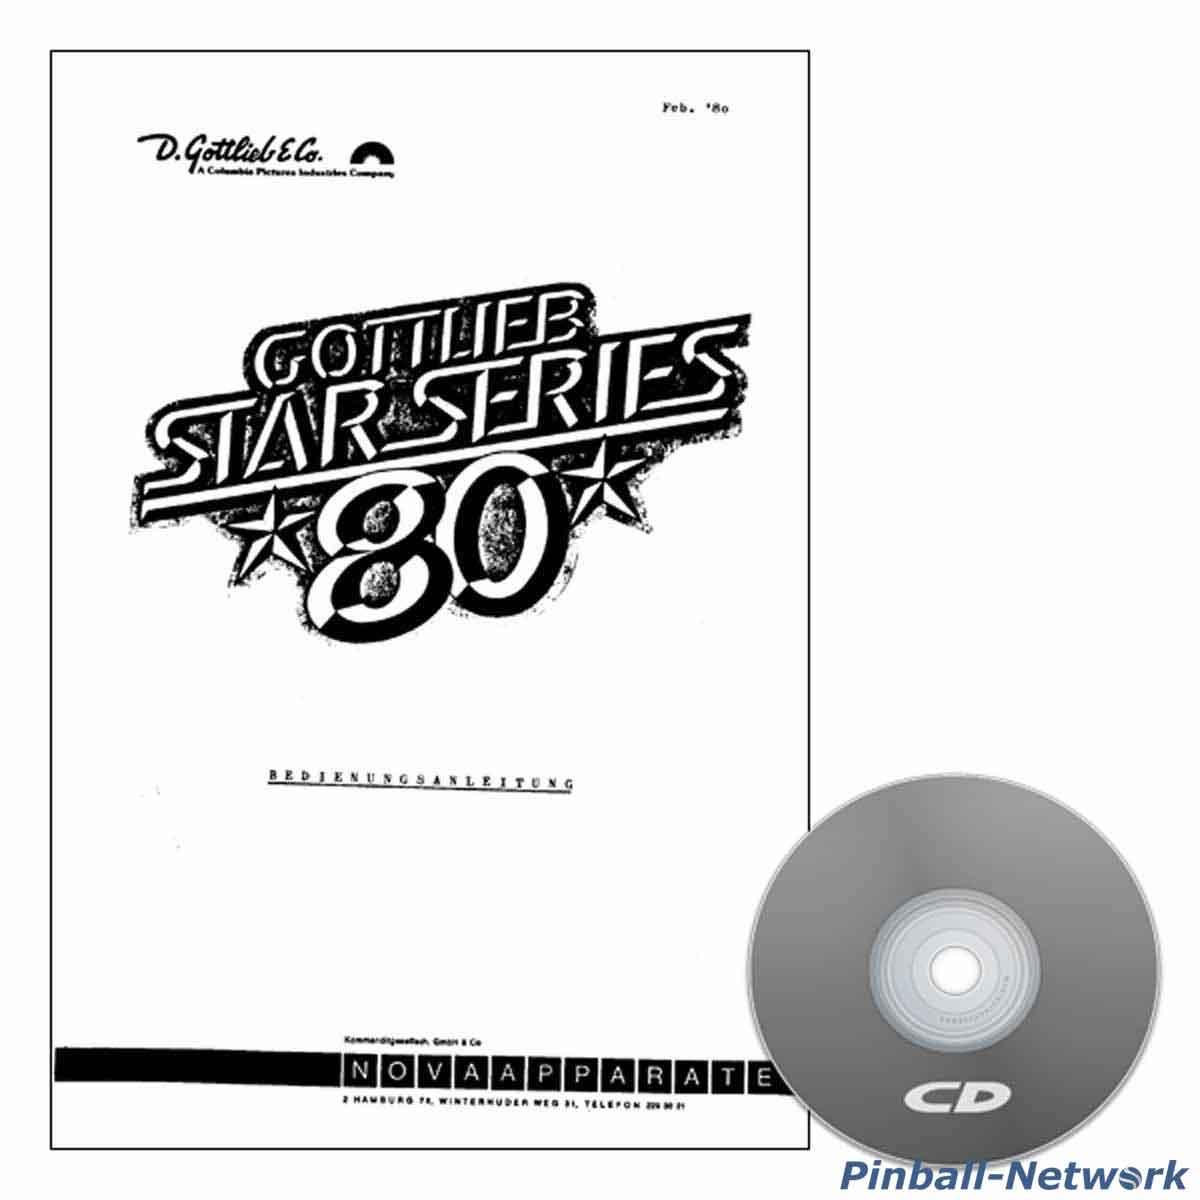 Gottlieb Star Series 80